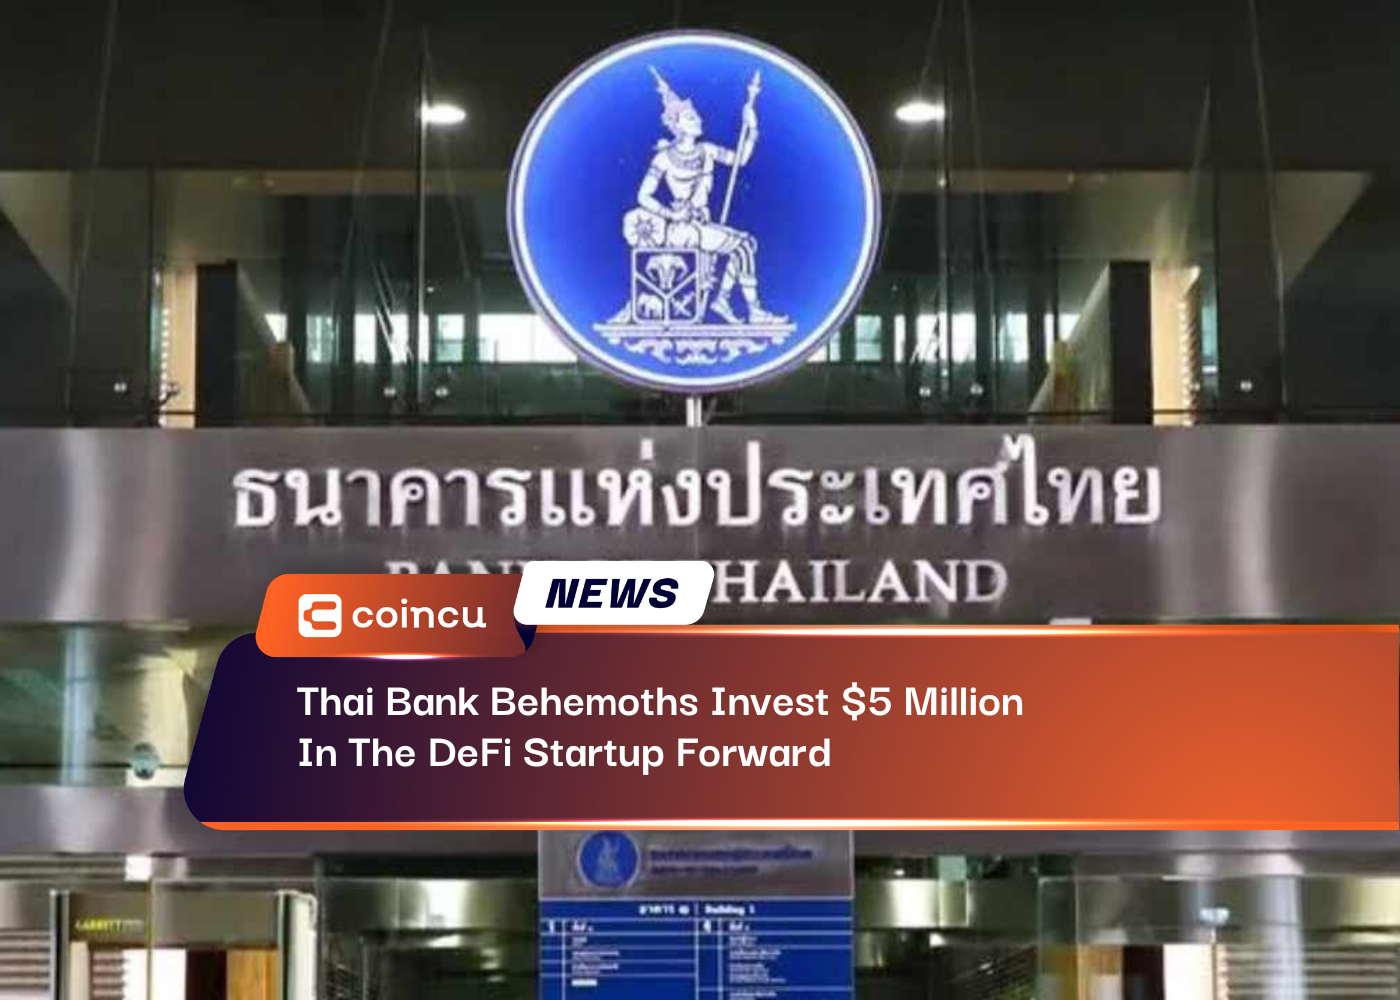 Thai Bank Behemoths Invest 5 Million